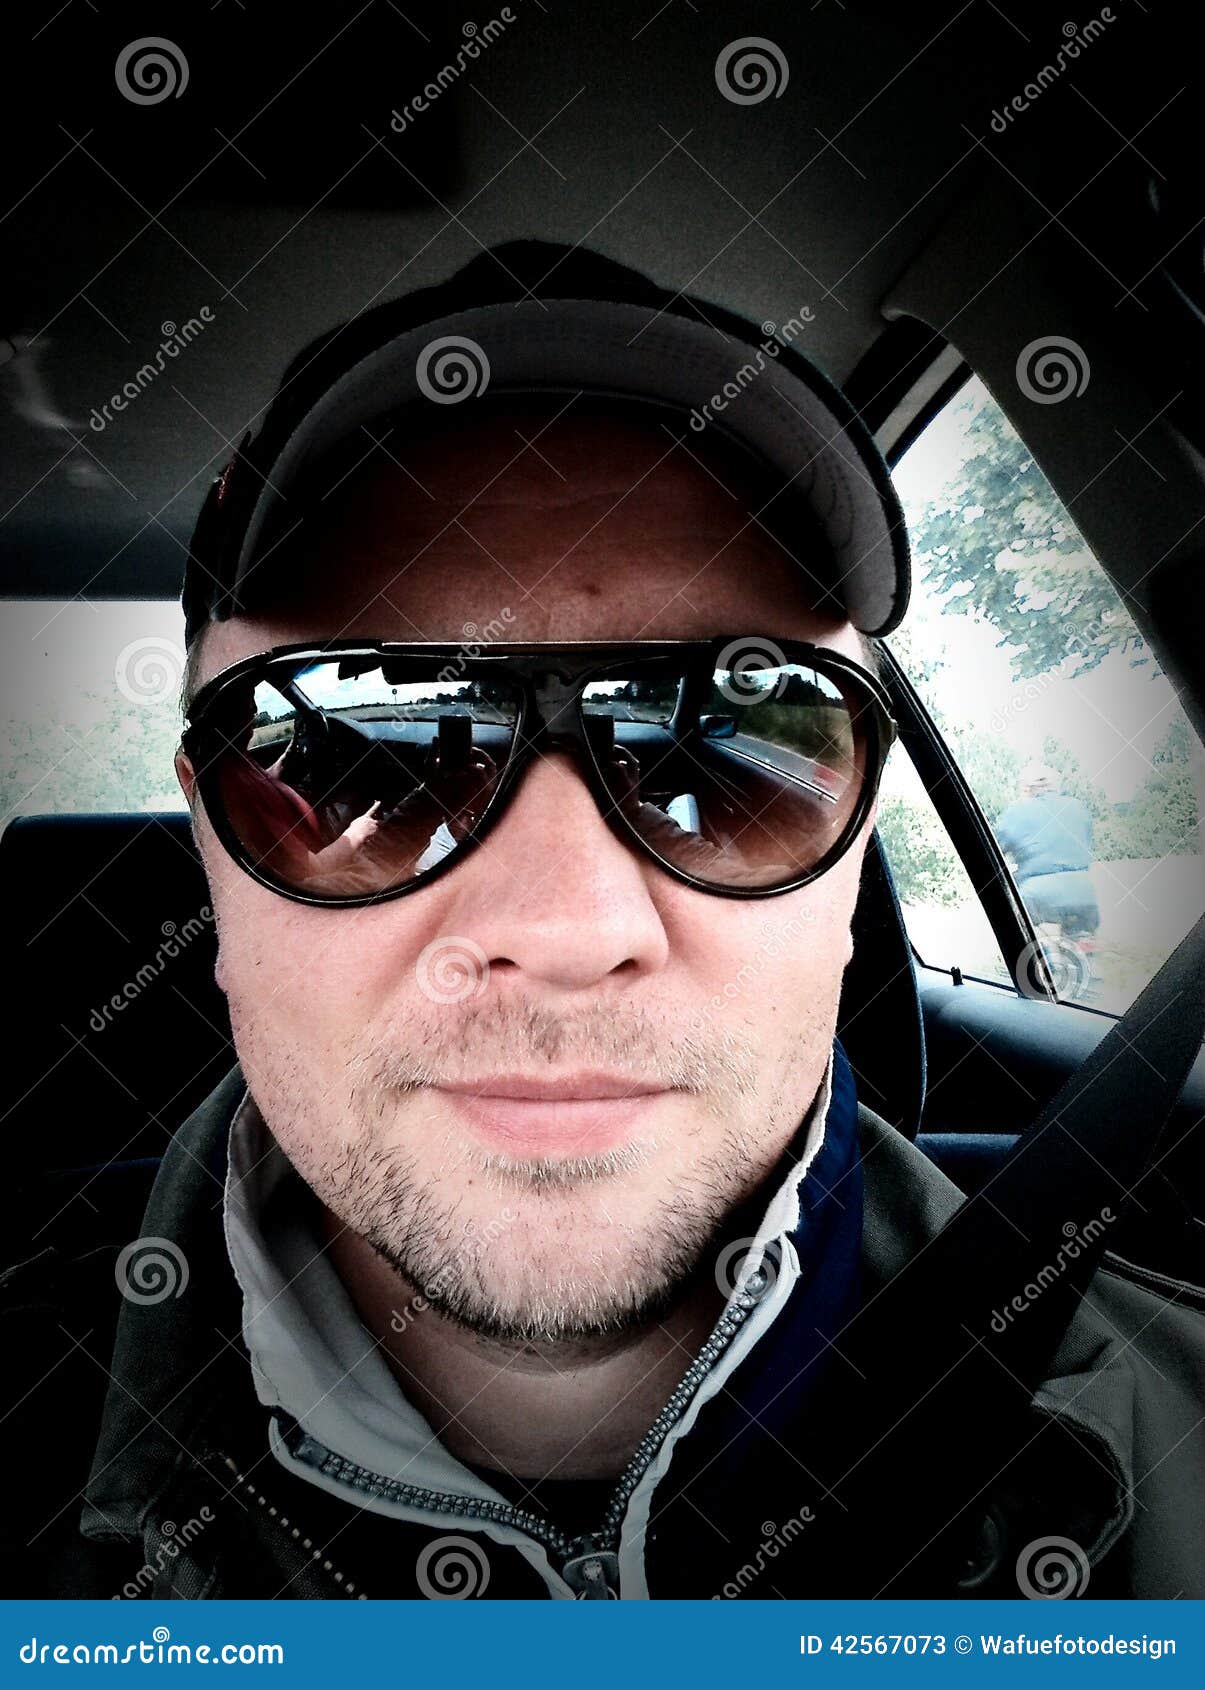 brian callaghan recommends sunglasses selfie in a car meme pic